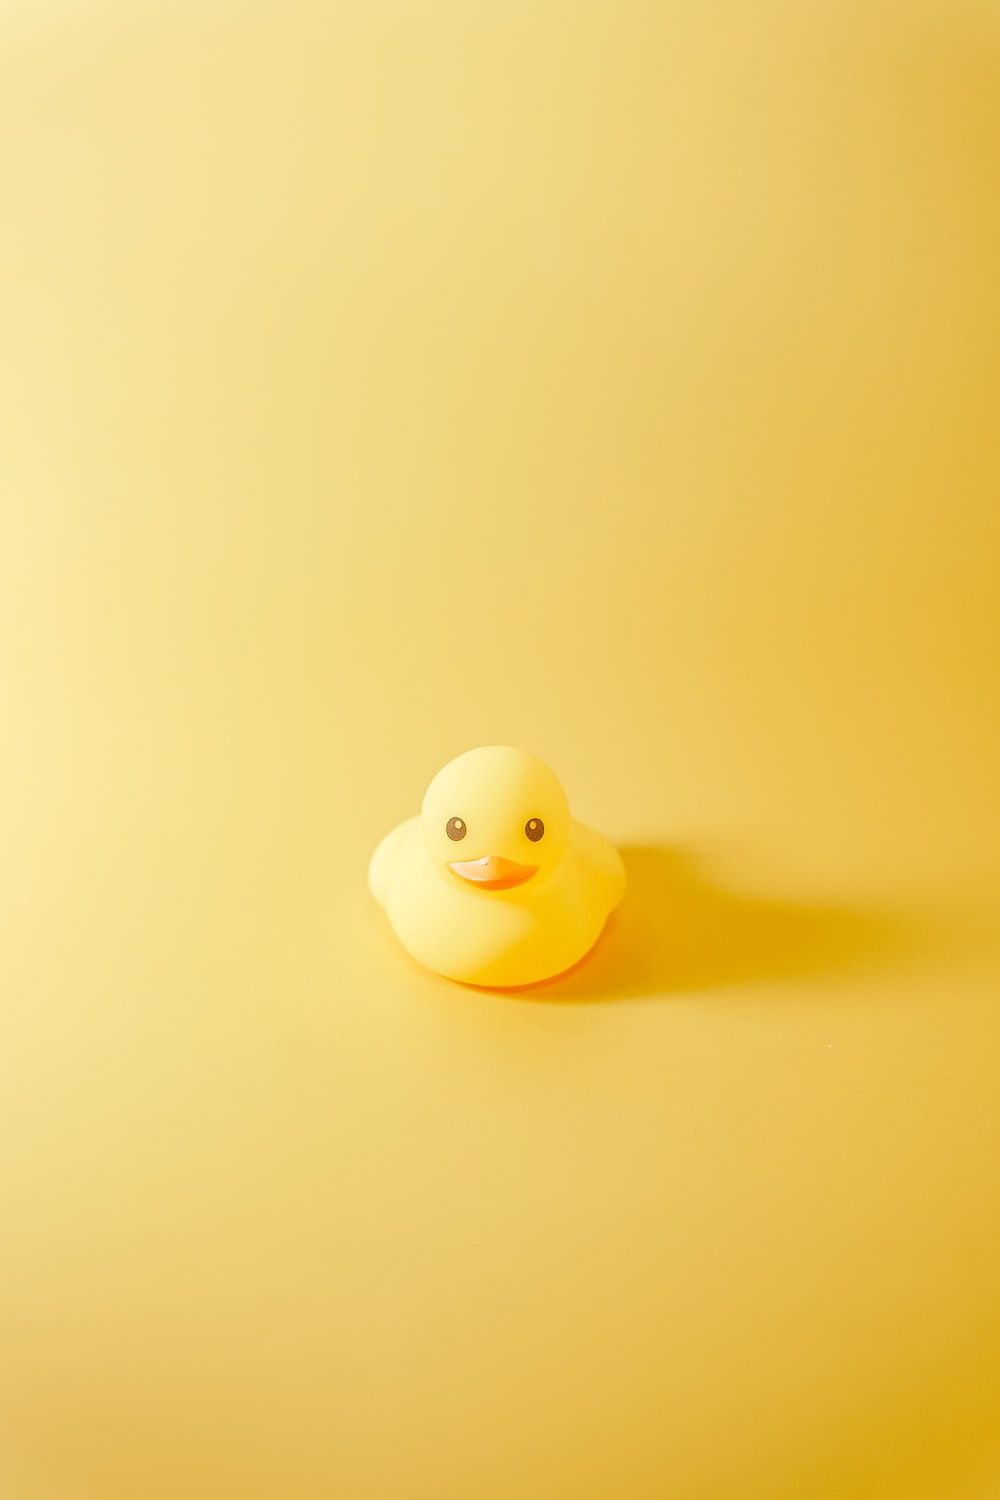 Free Duck Image